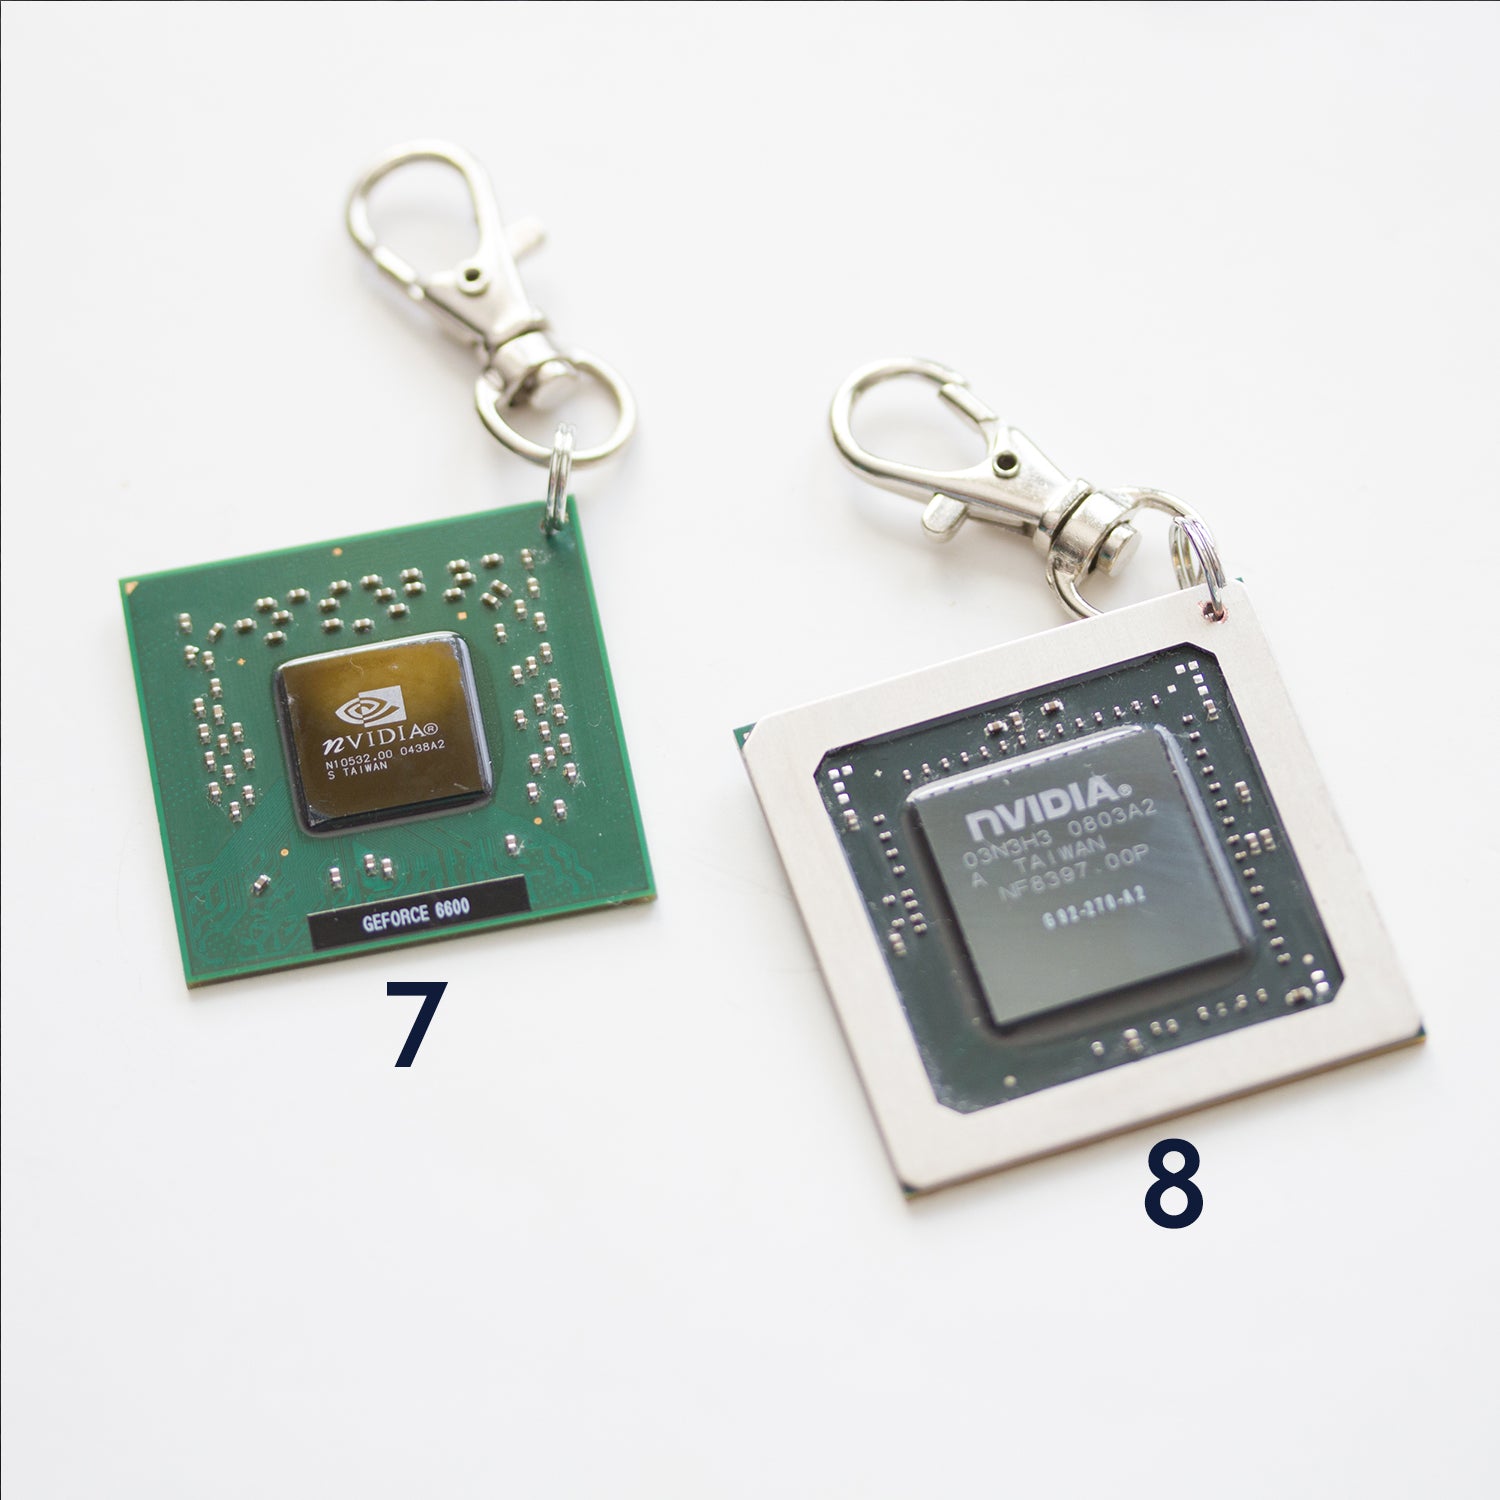 Chipset keychain, recycled computer keychain, nVidia graphic processor, GPU